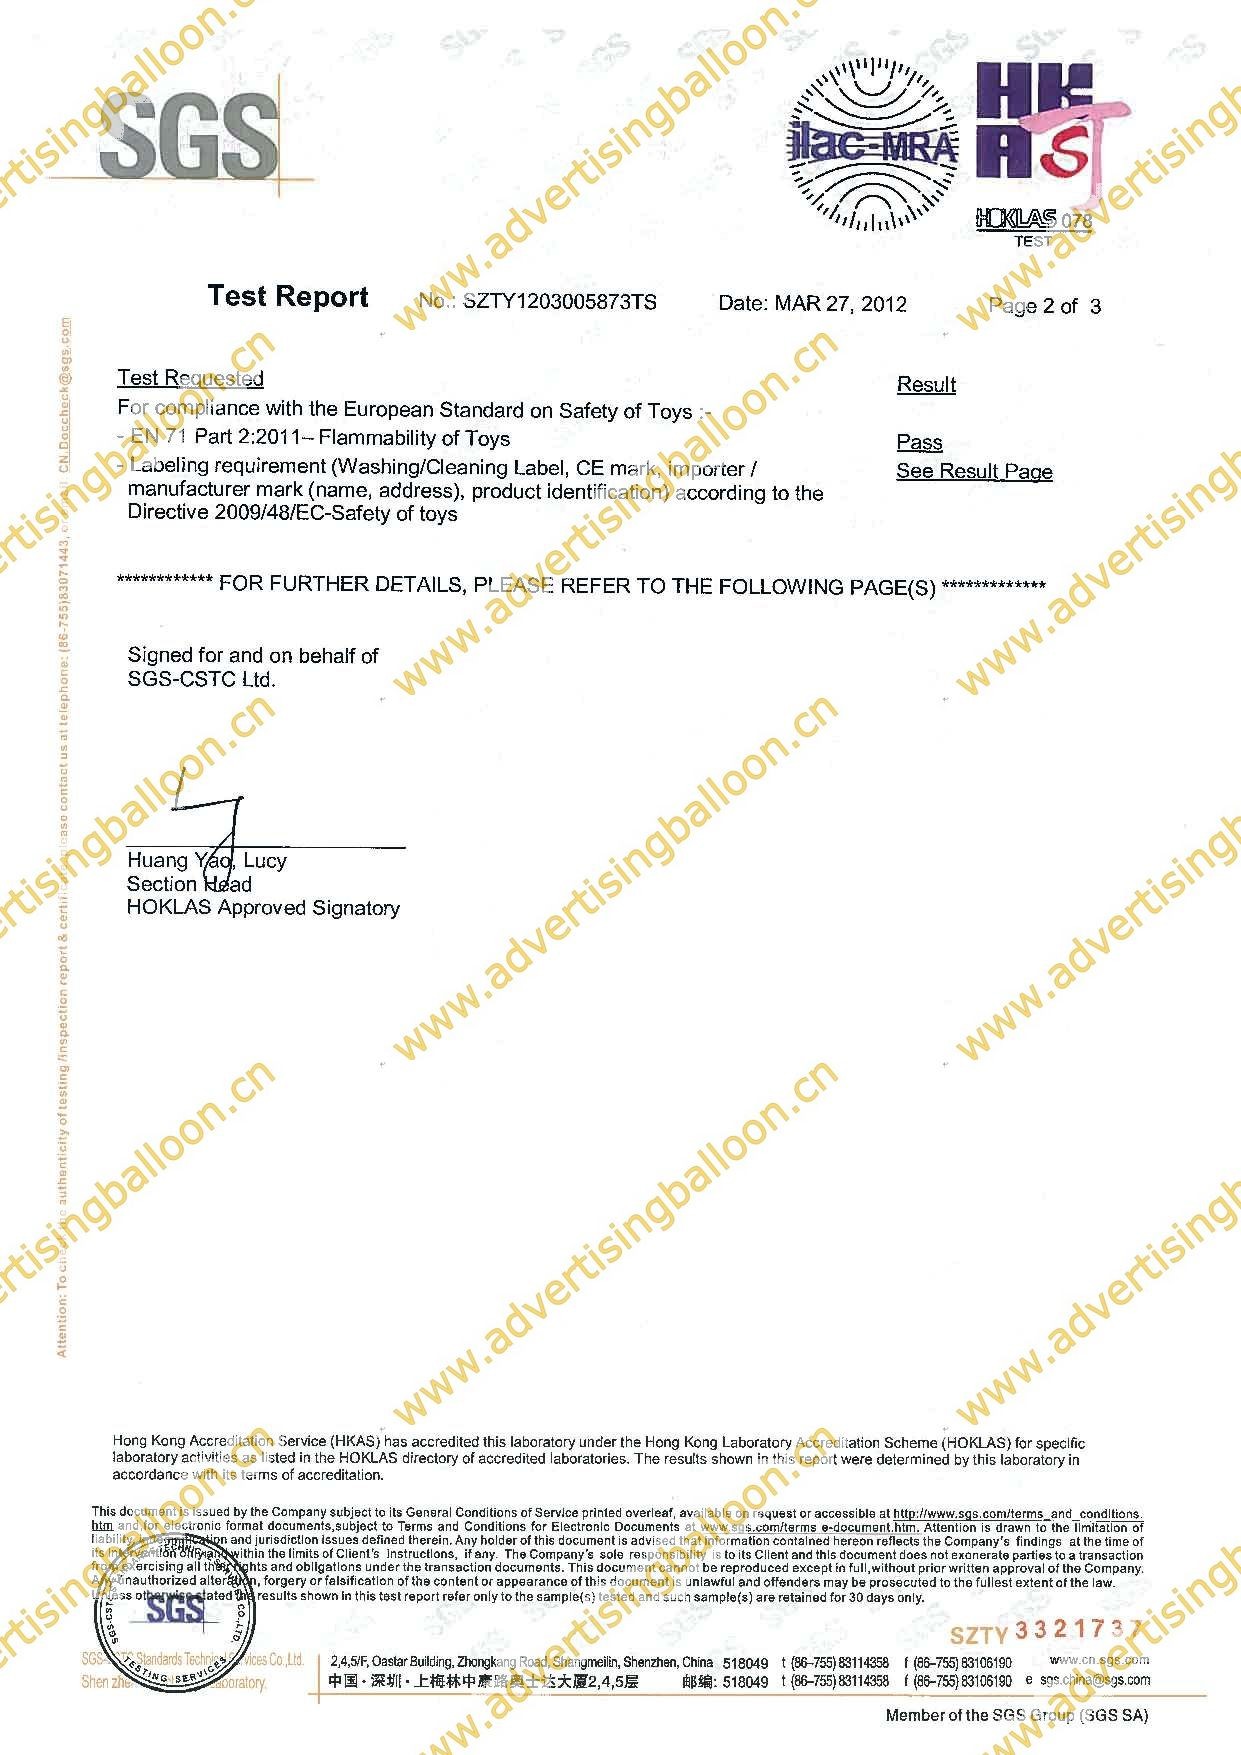 Guangzhou Troy Balloon Co., Ltd Certifications